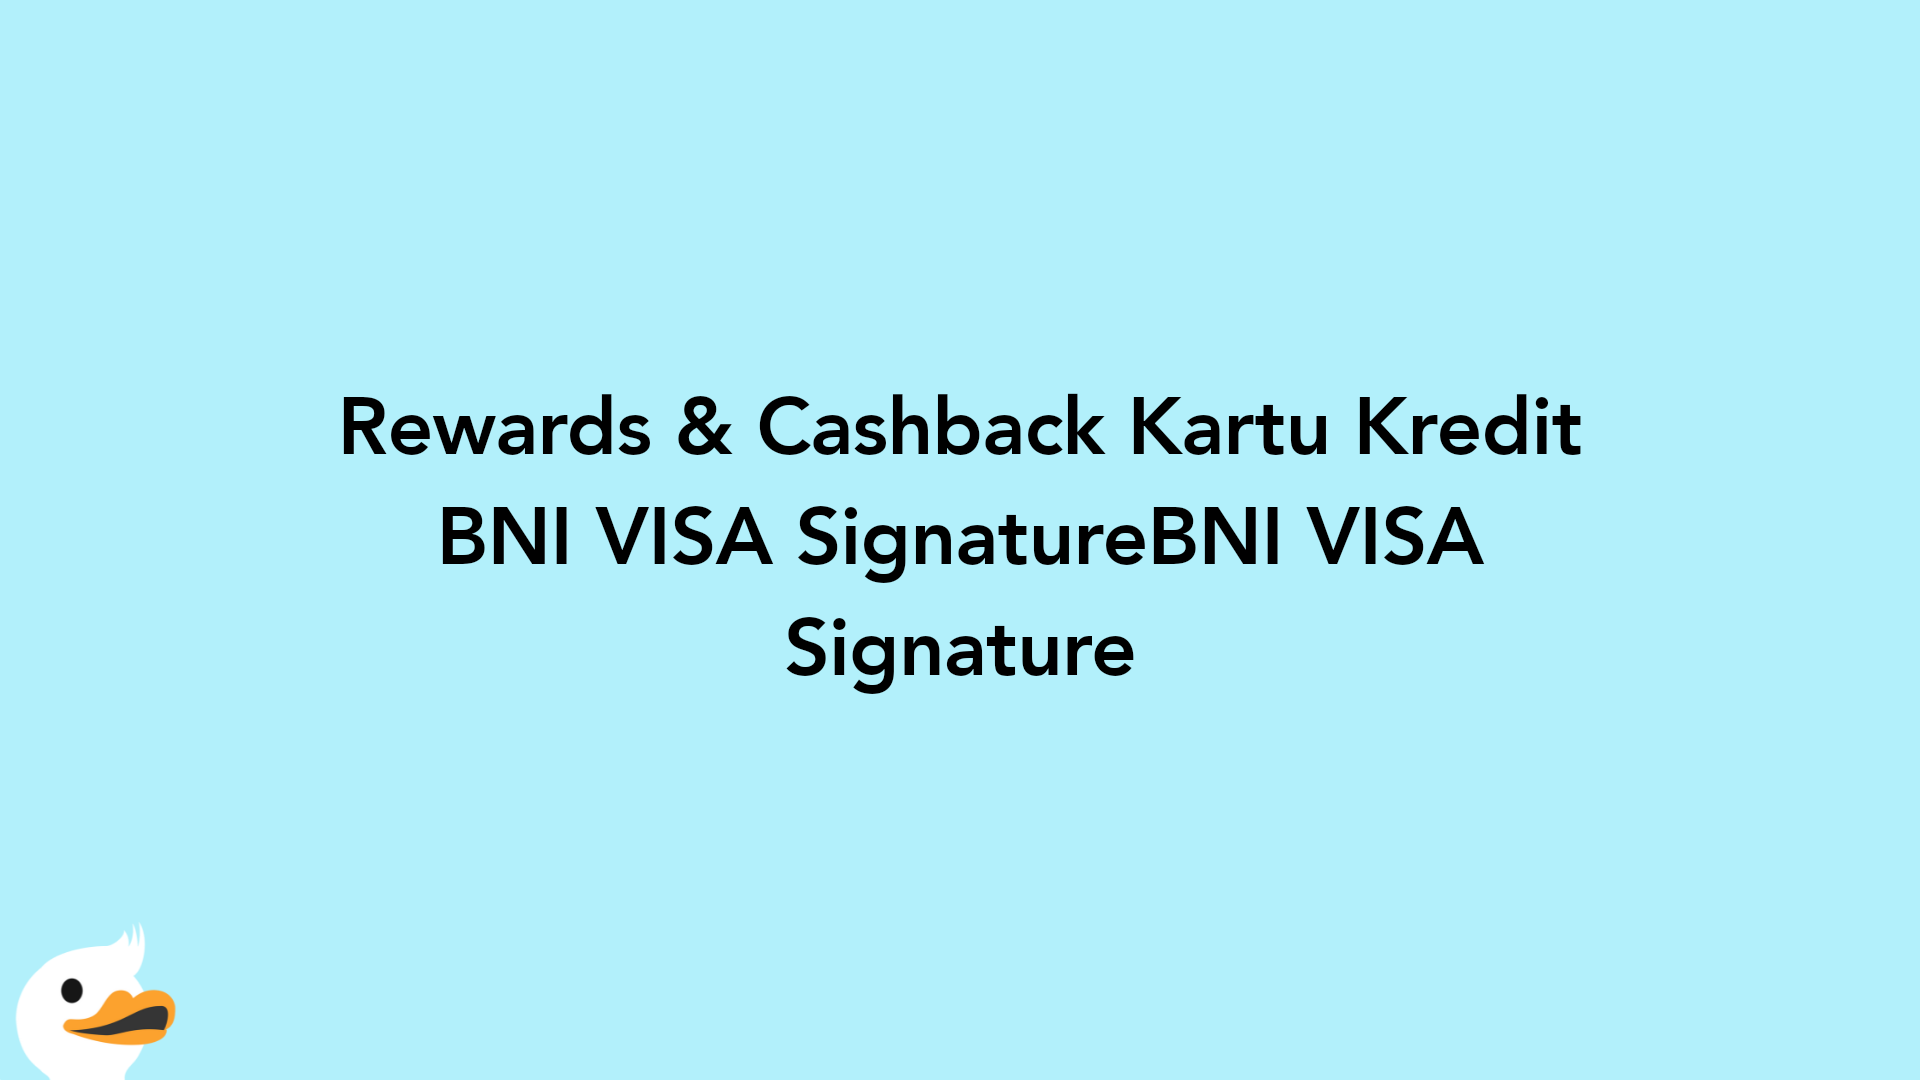 Rewards & Cashback Kartu Kredit BNI VISA SignatureBNI VISA Signature